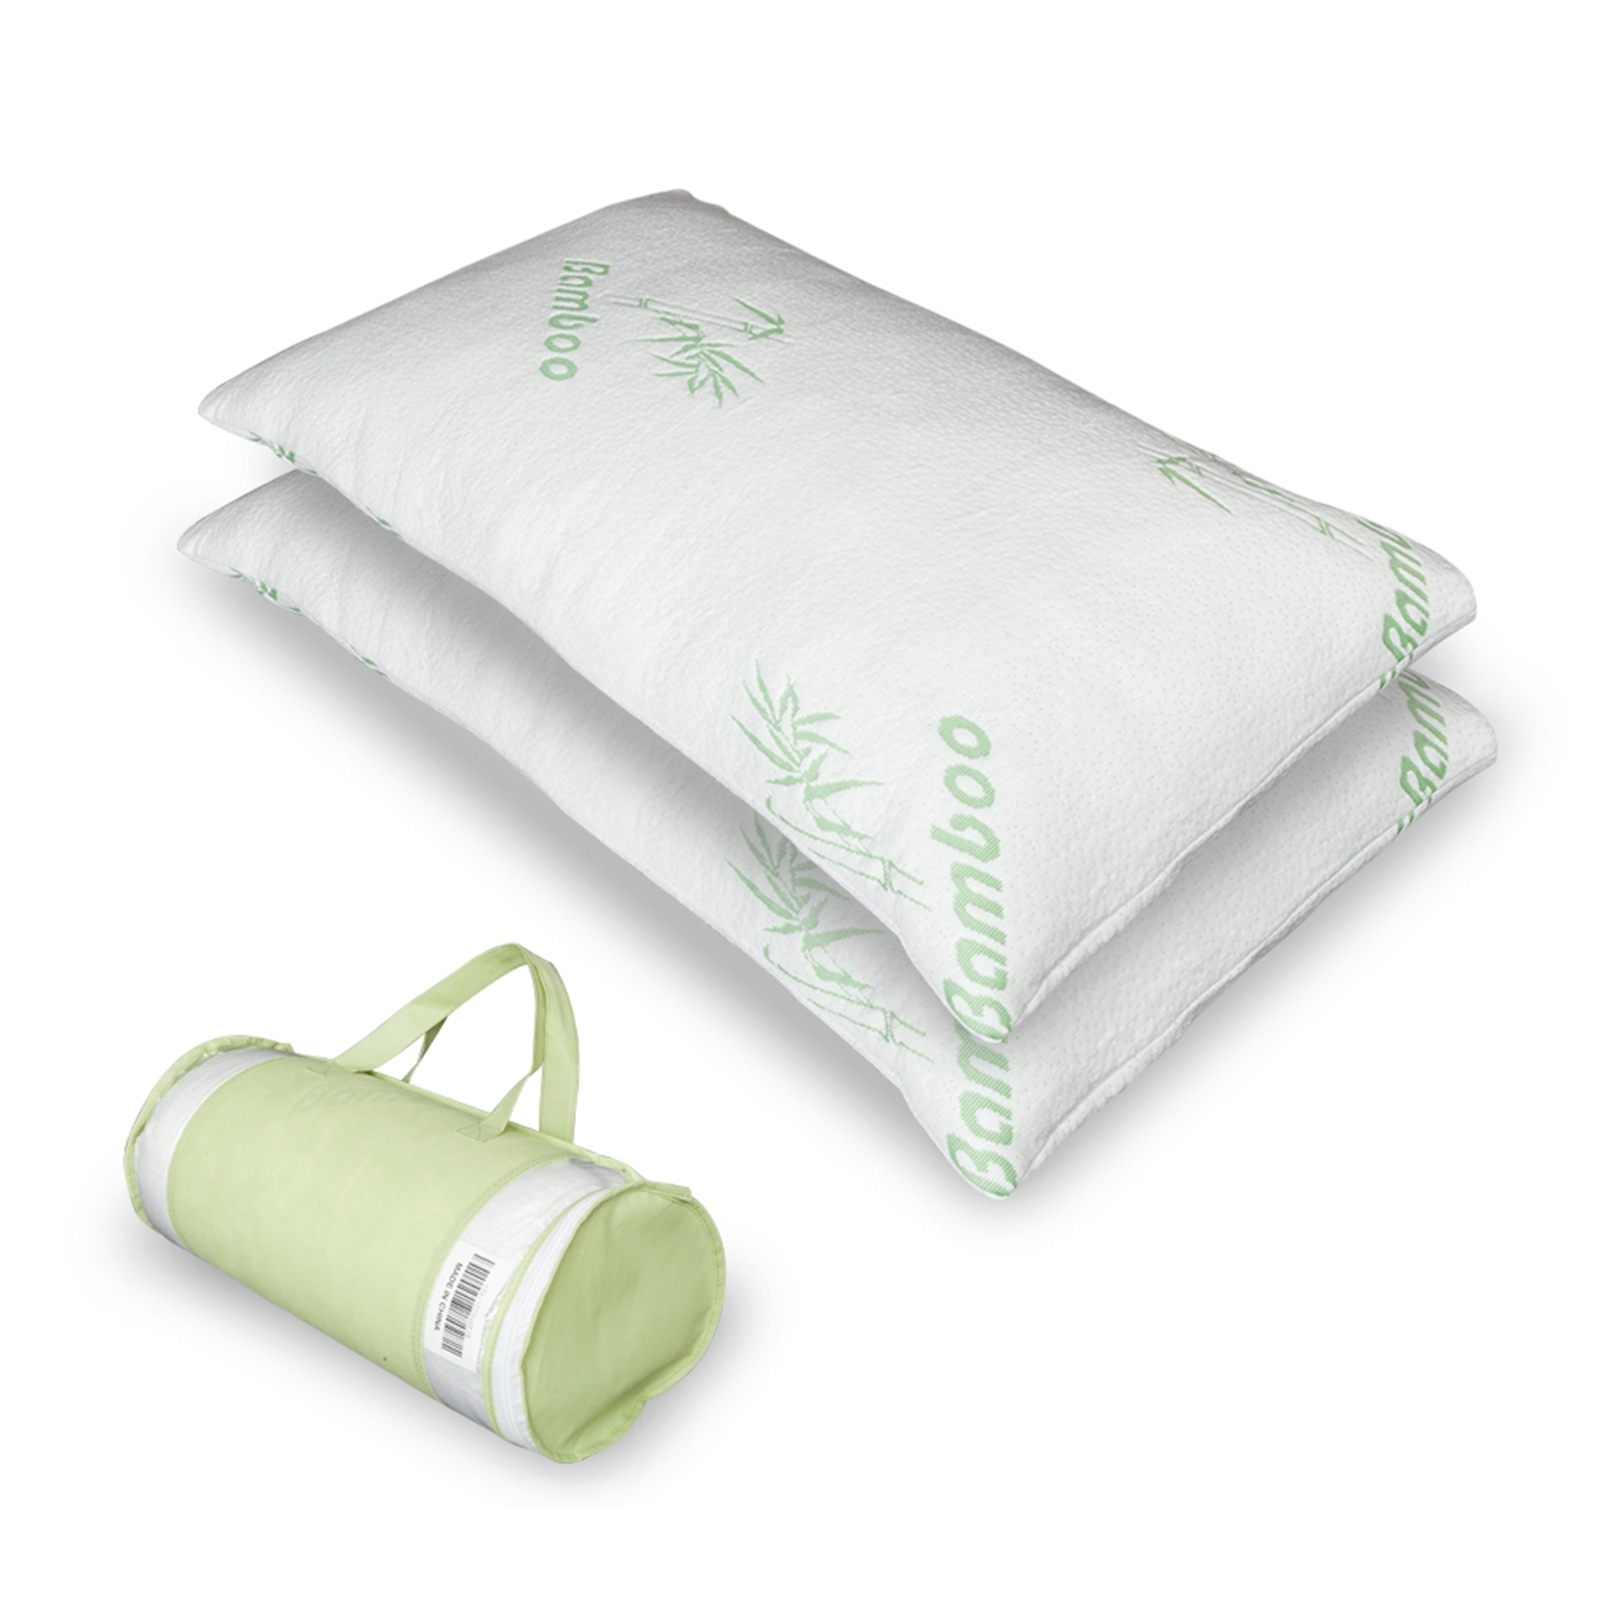 Premium Firm Hypoallergenic Bamboo Fiber Memory Foam Pillow King (Single)